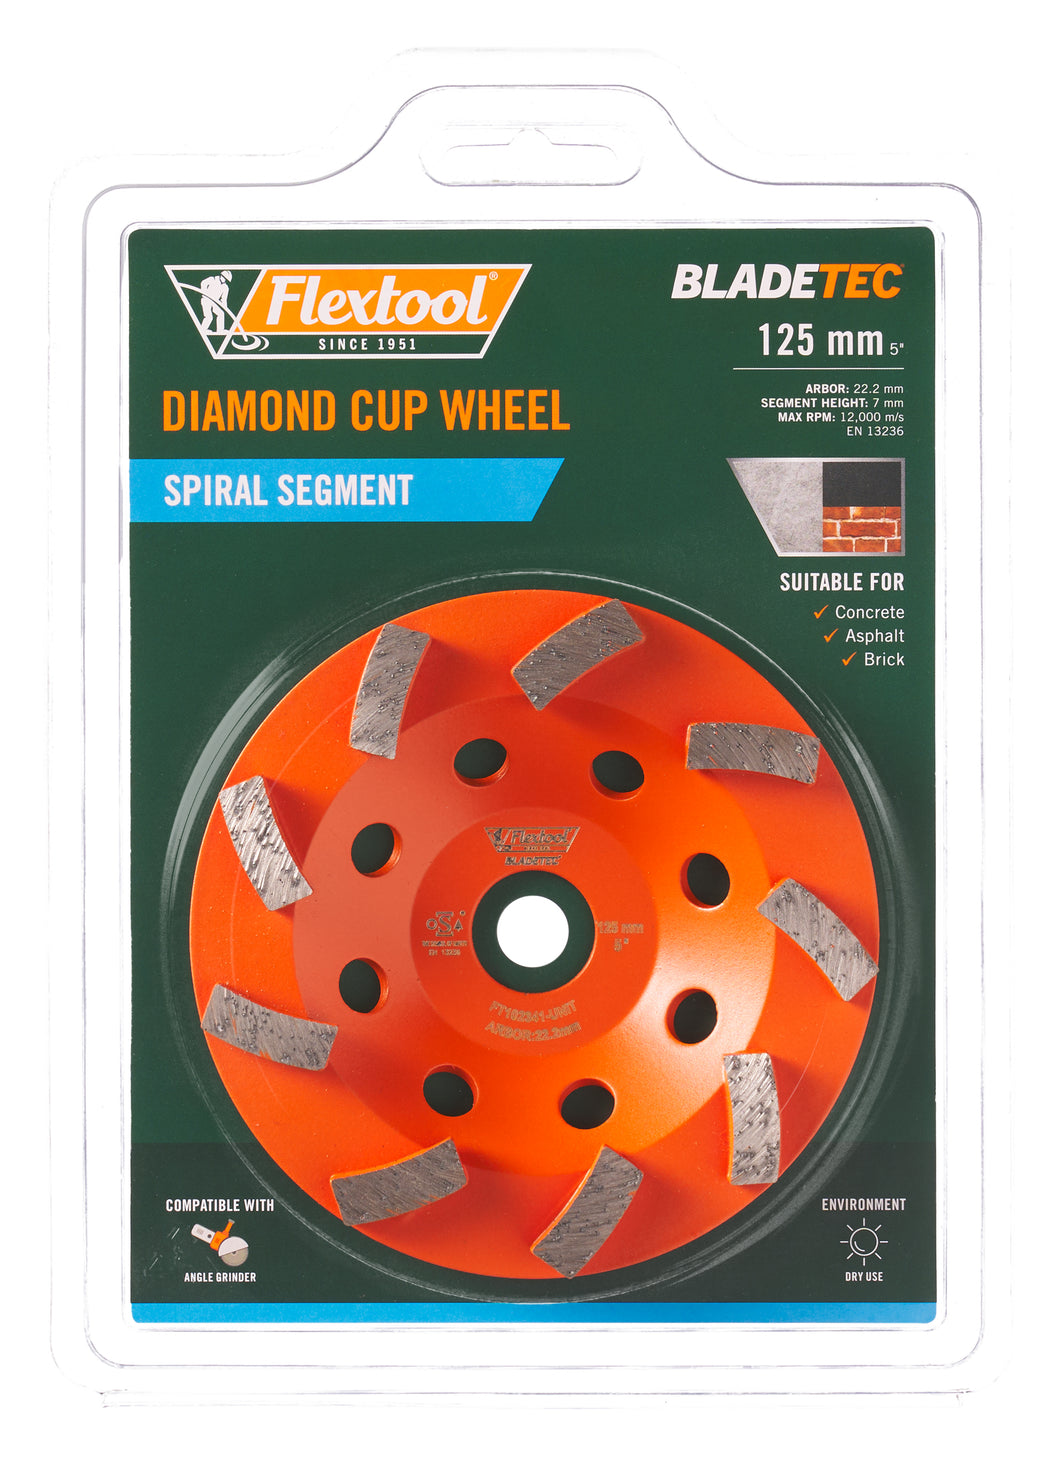 Flextool BladeTec Diamond Cup Wheel - Spiral Segment (125 mm 5